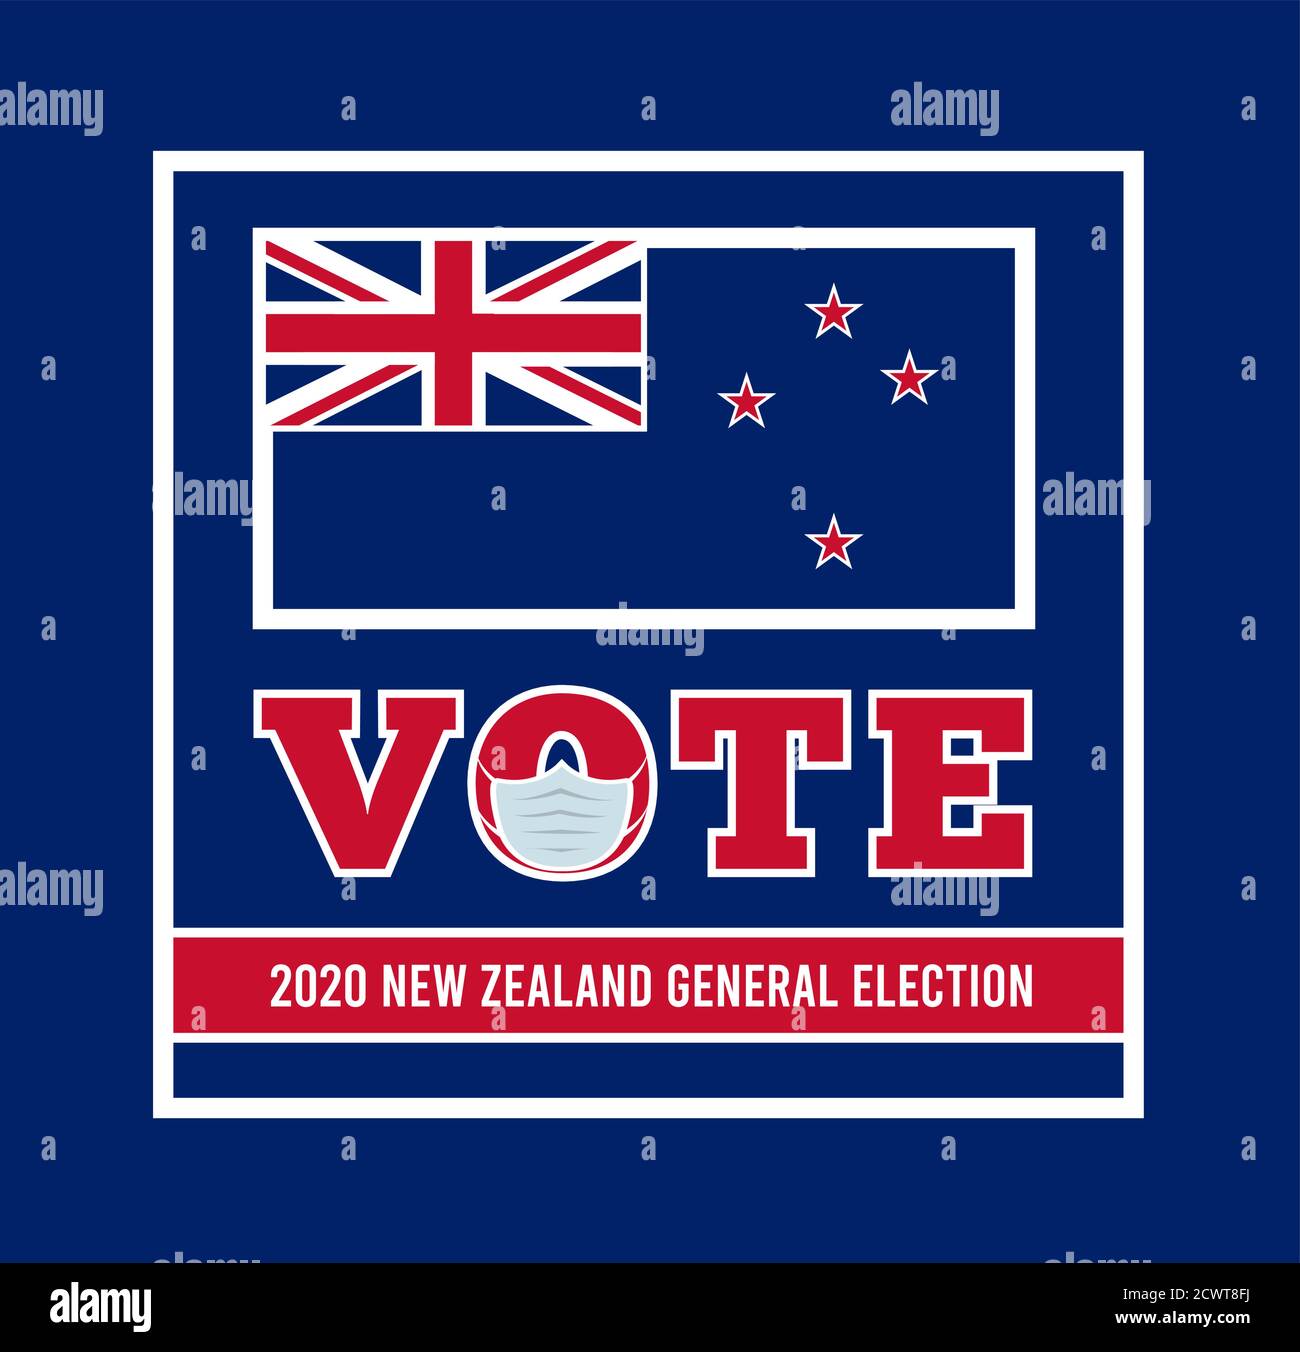 2020 New Zealand general election. Vector illustration Stock Vector